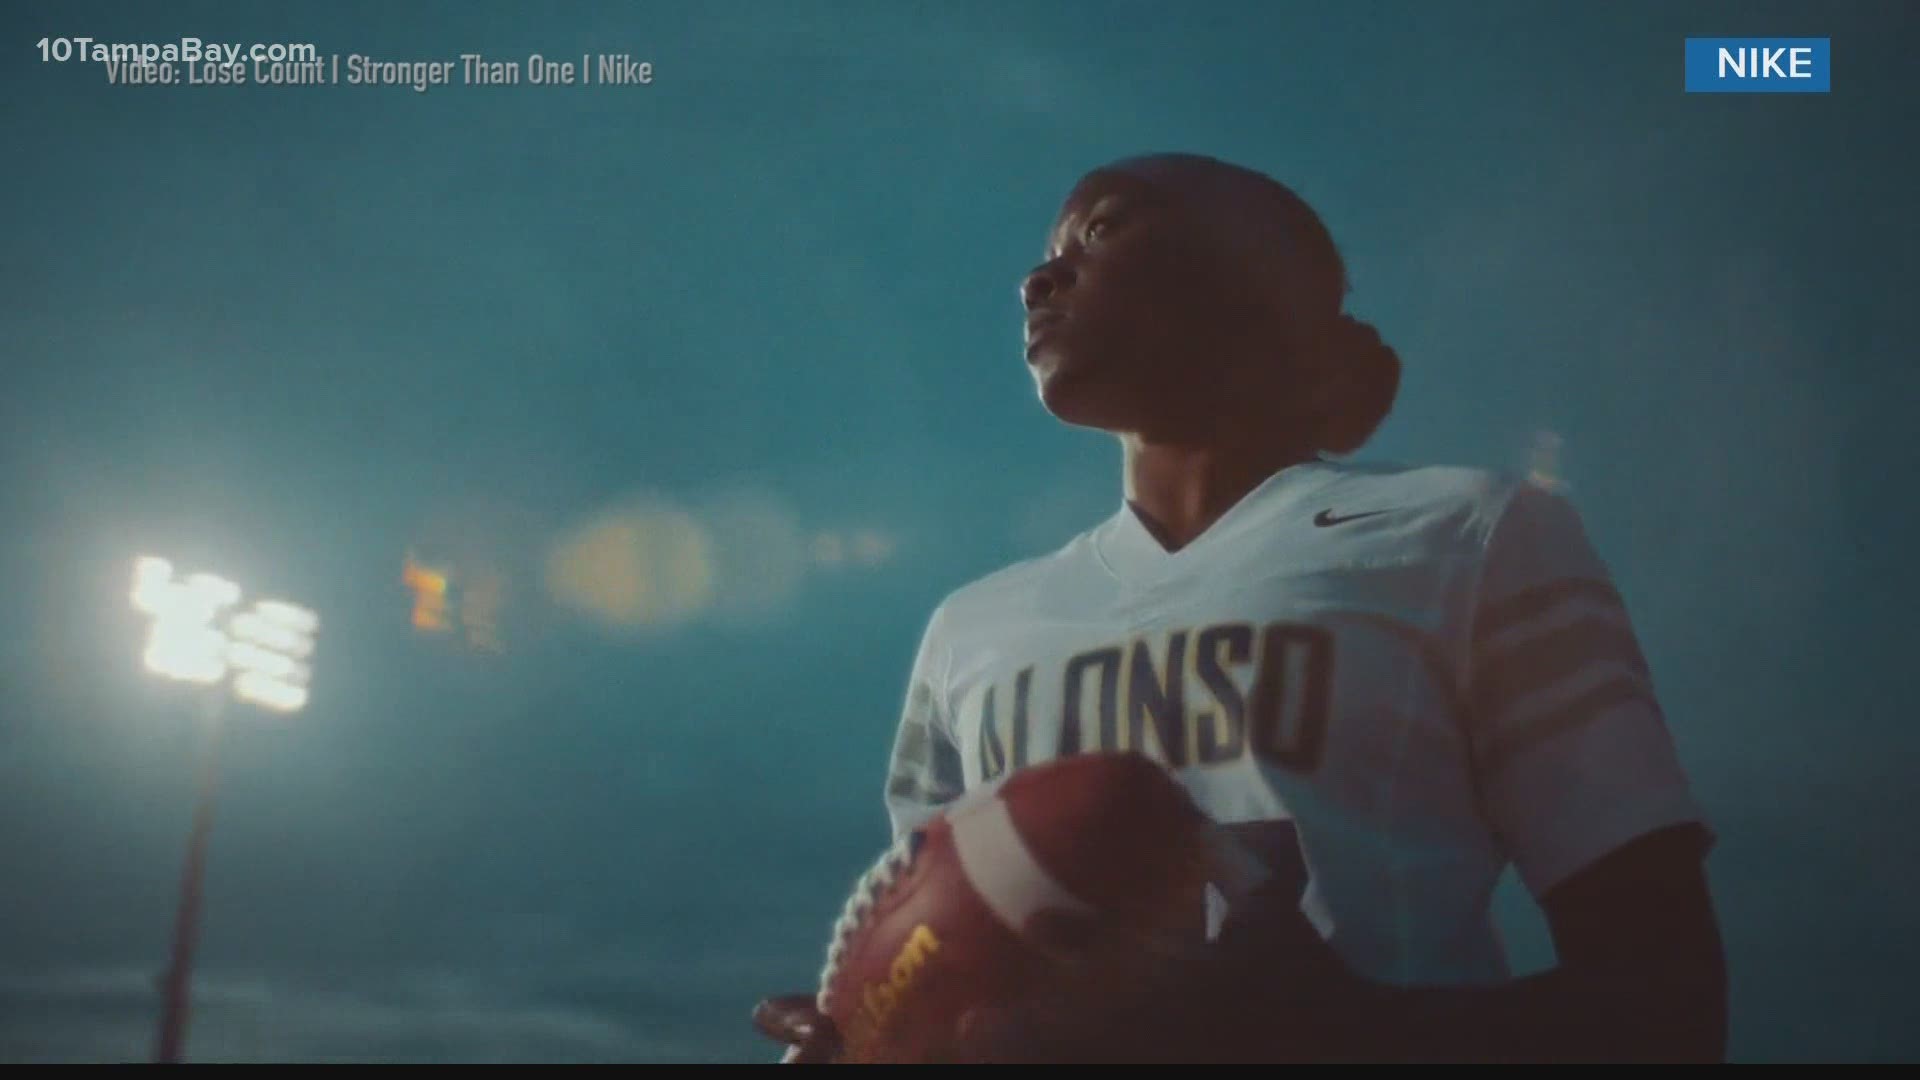 high school flag team featured in Nike ad | wtsp.com